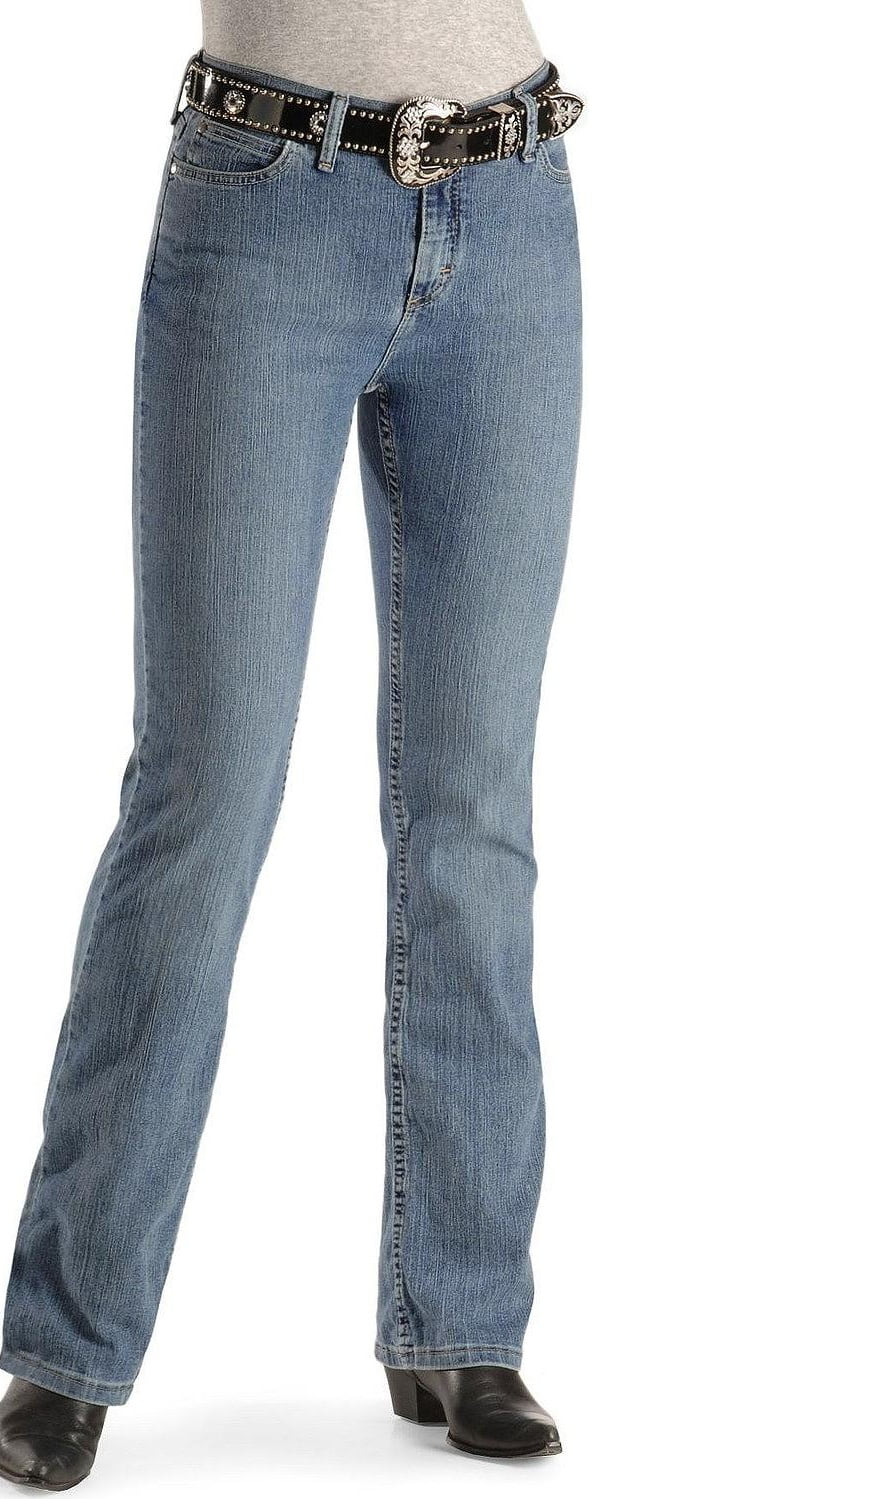 real wrangler jeans